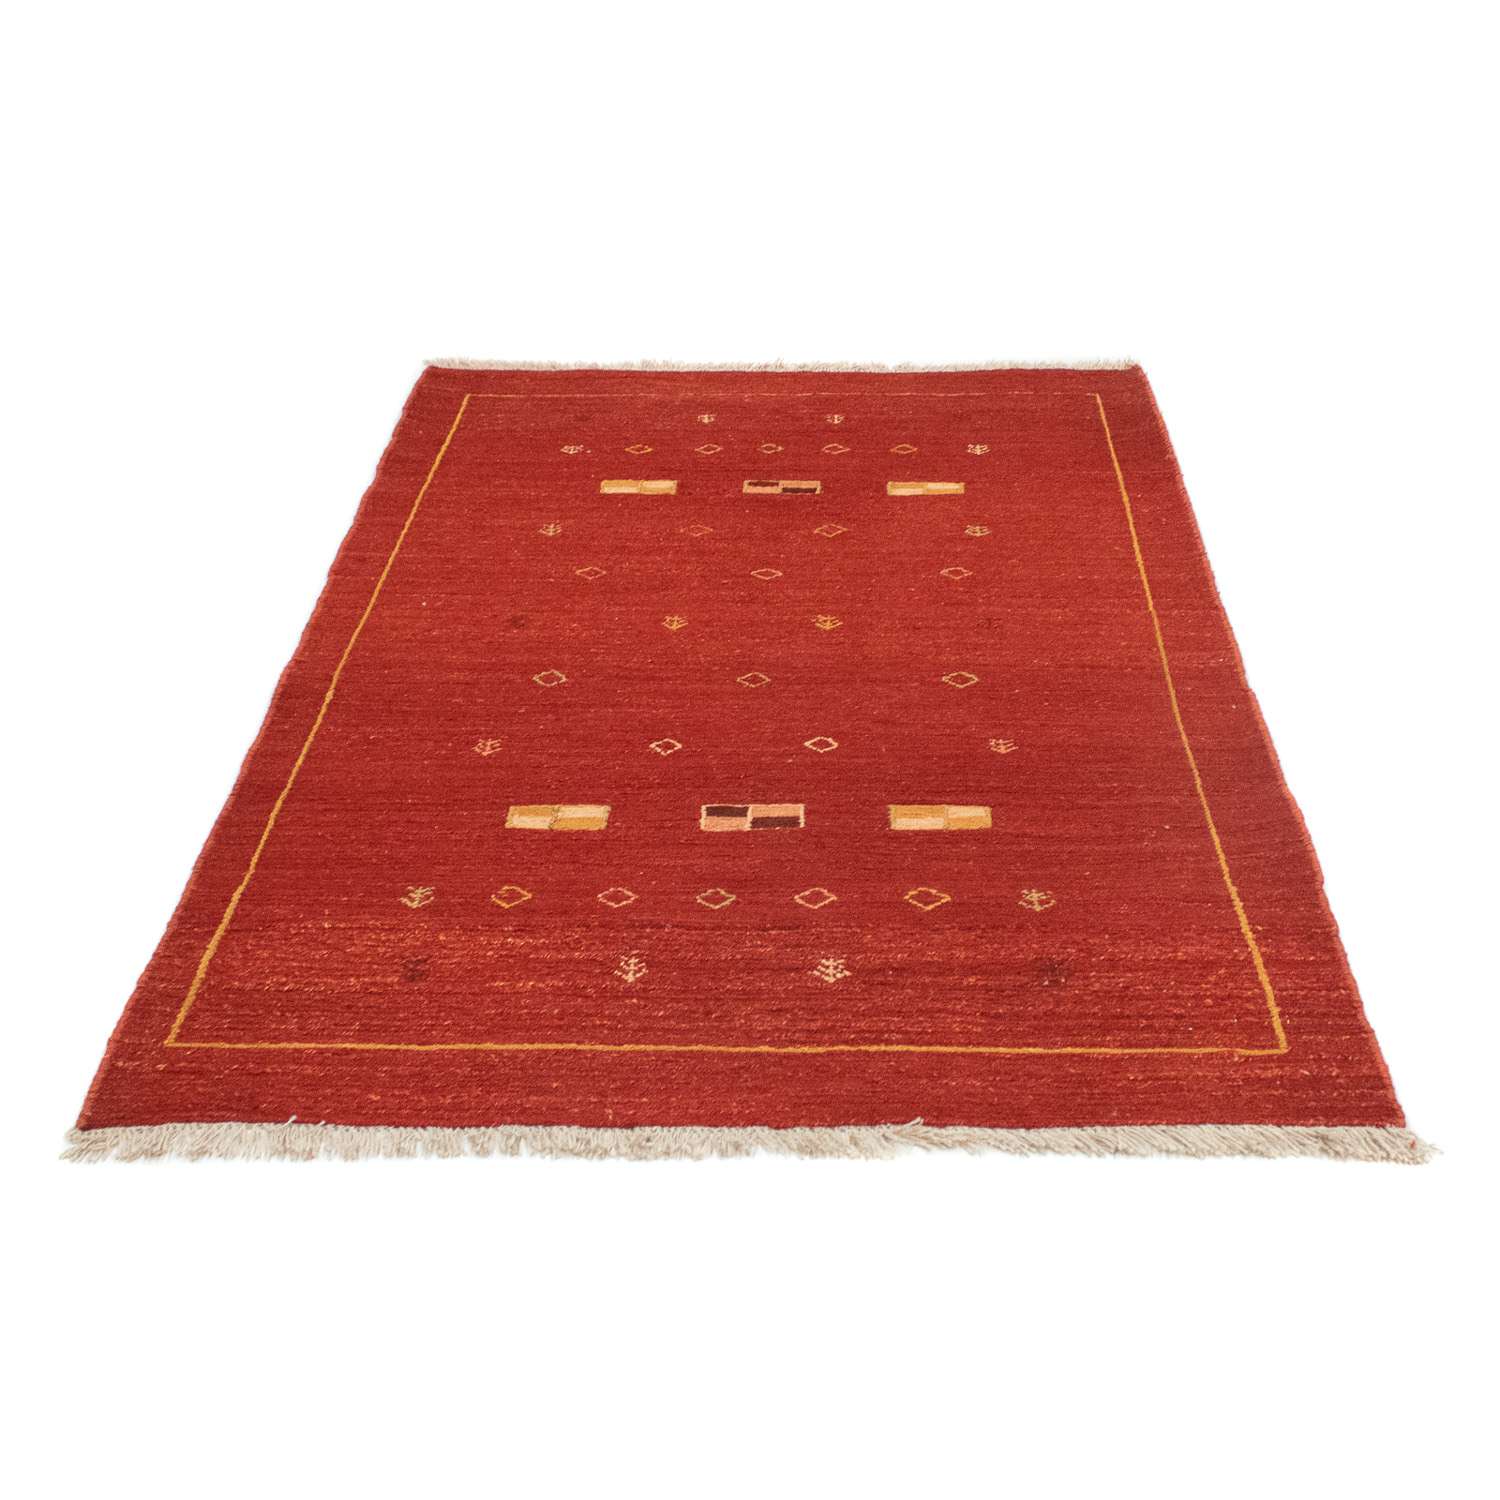 Gabbeh-teppe - persisk - 180 x 113 cm - rød